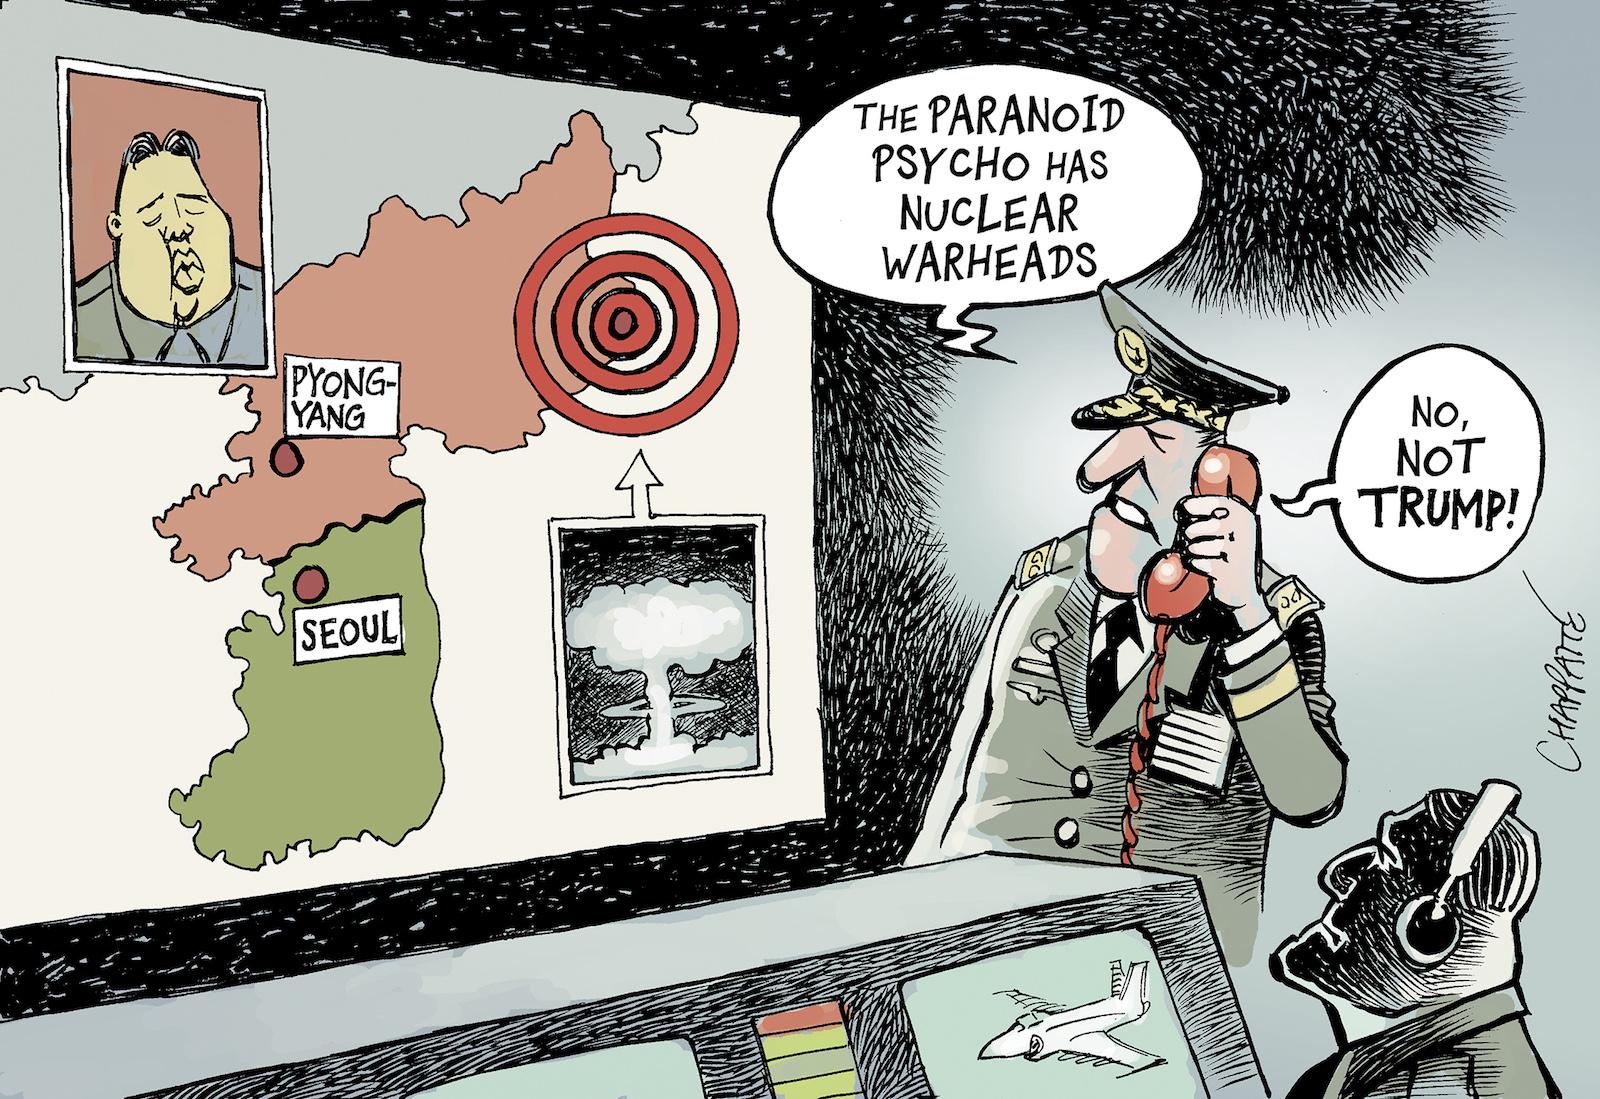 North Korea's nuclear test